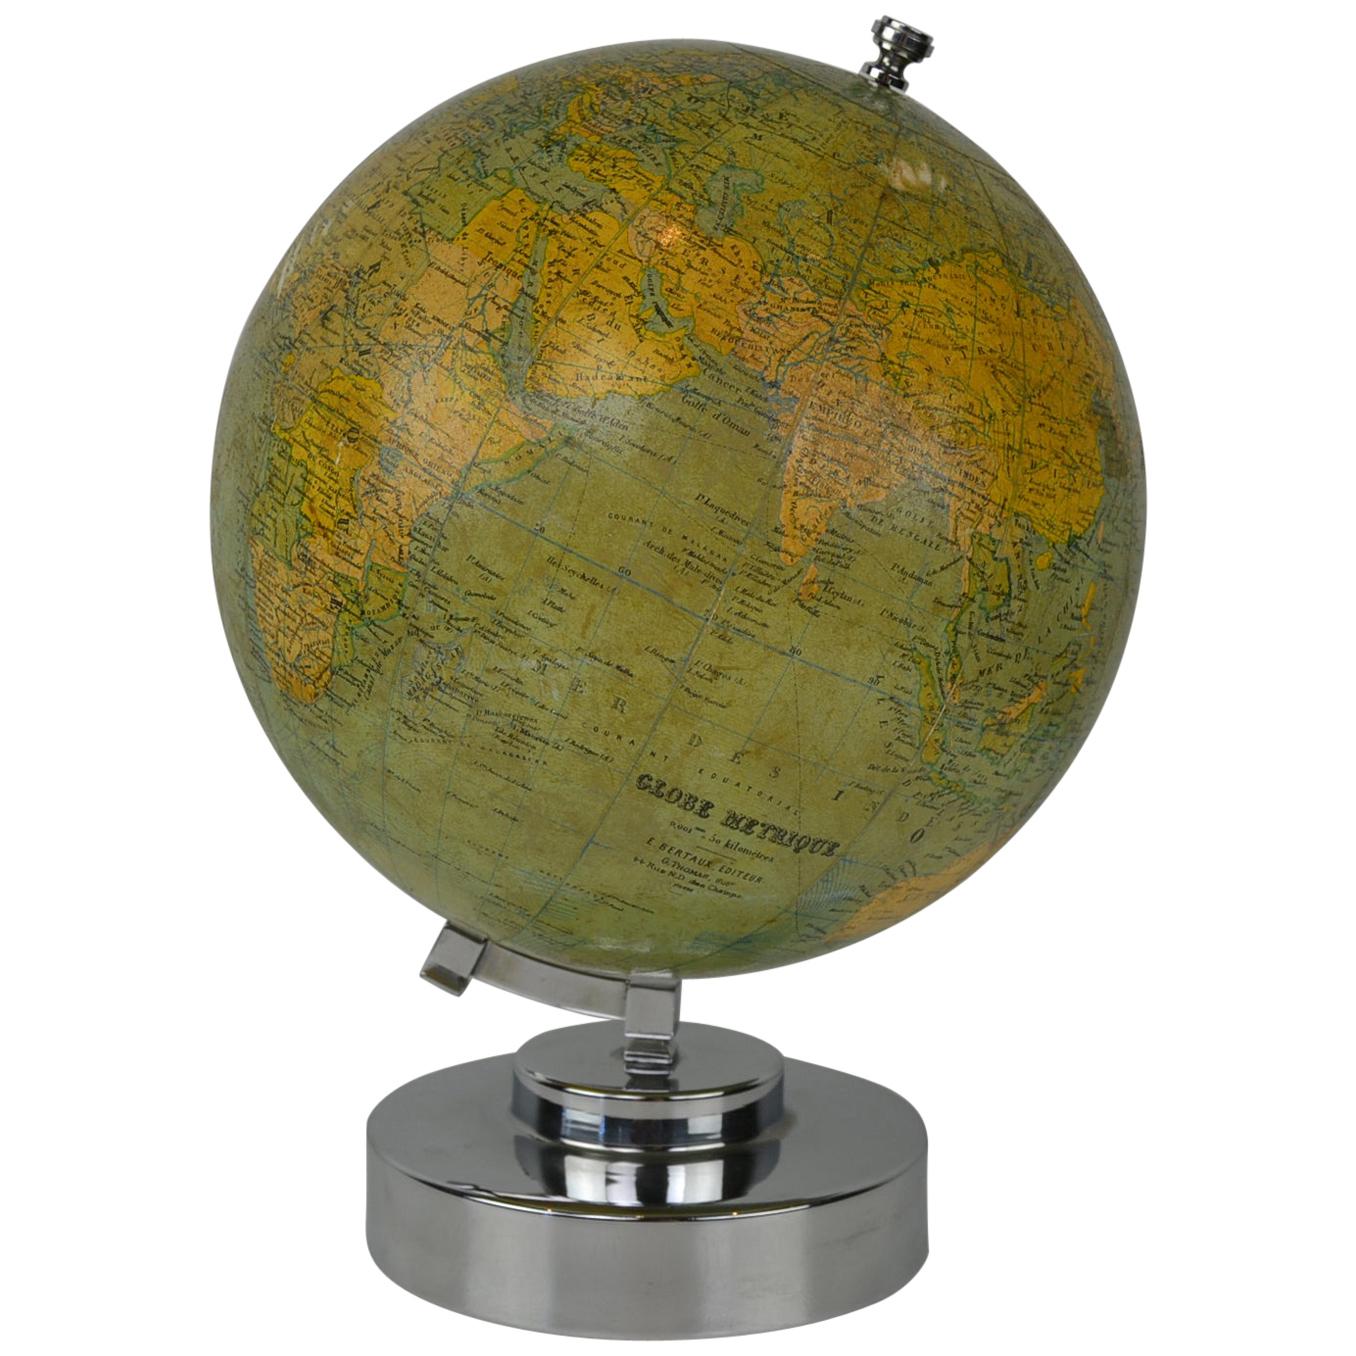 Plaster Globe Metrique on Chrome Base, G.Thomas Paris, E.Bertaux, France